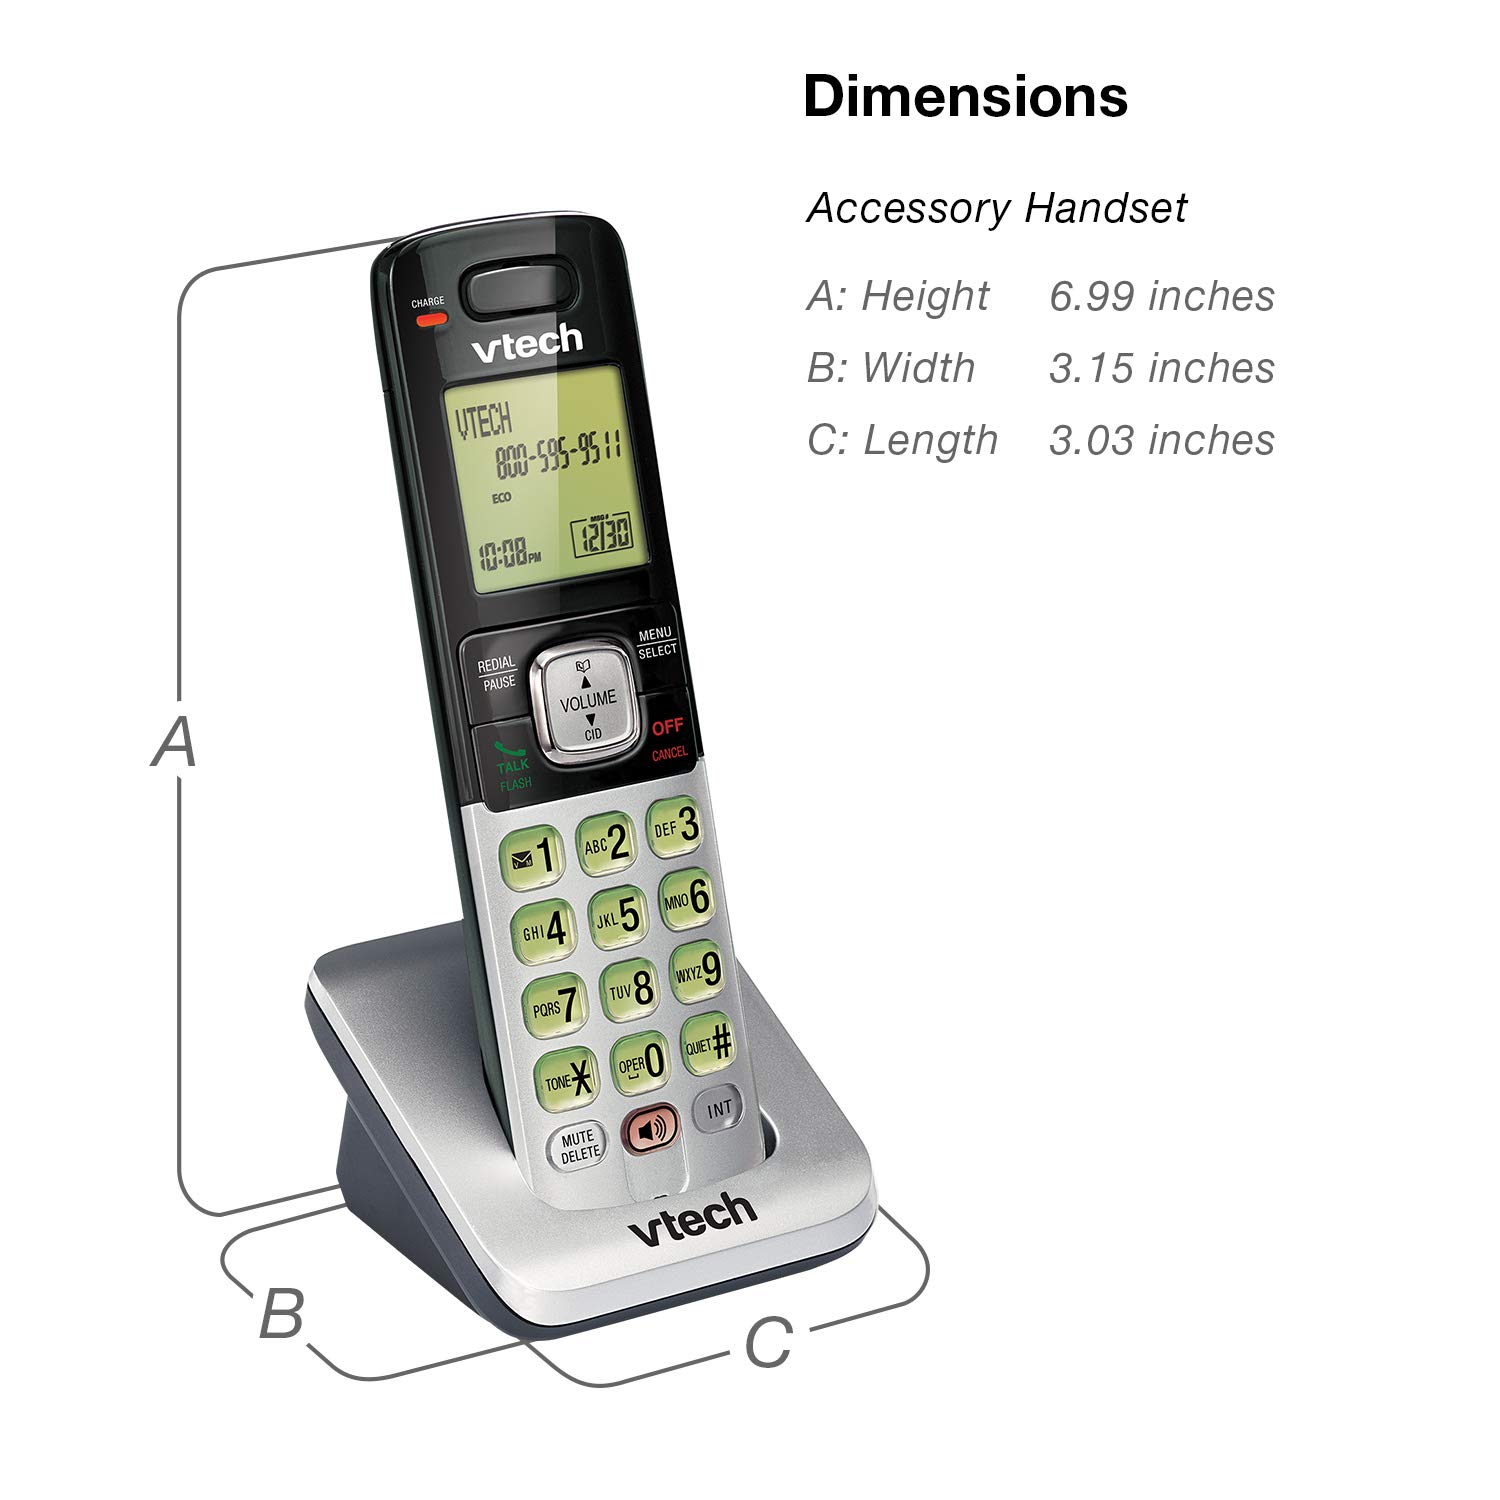 VTech CS6719-2 2-Handset Expandable Cordless Phone with Caller ID/Call Waiting, Handset Intercom & Backlit Display/Keypad, Silver